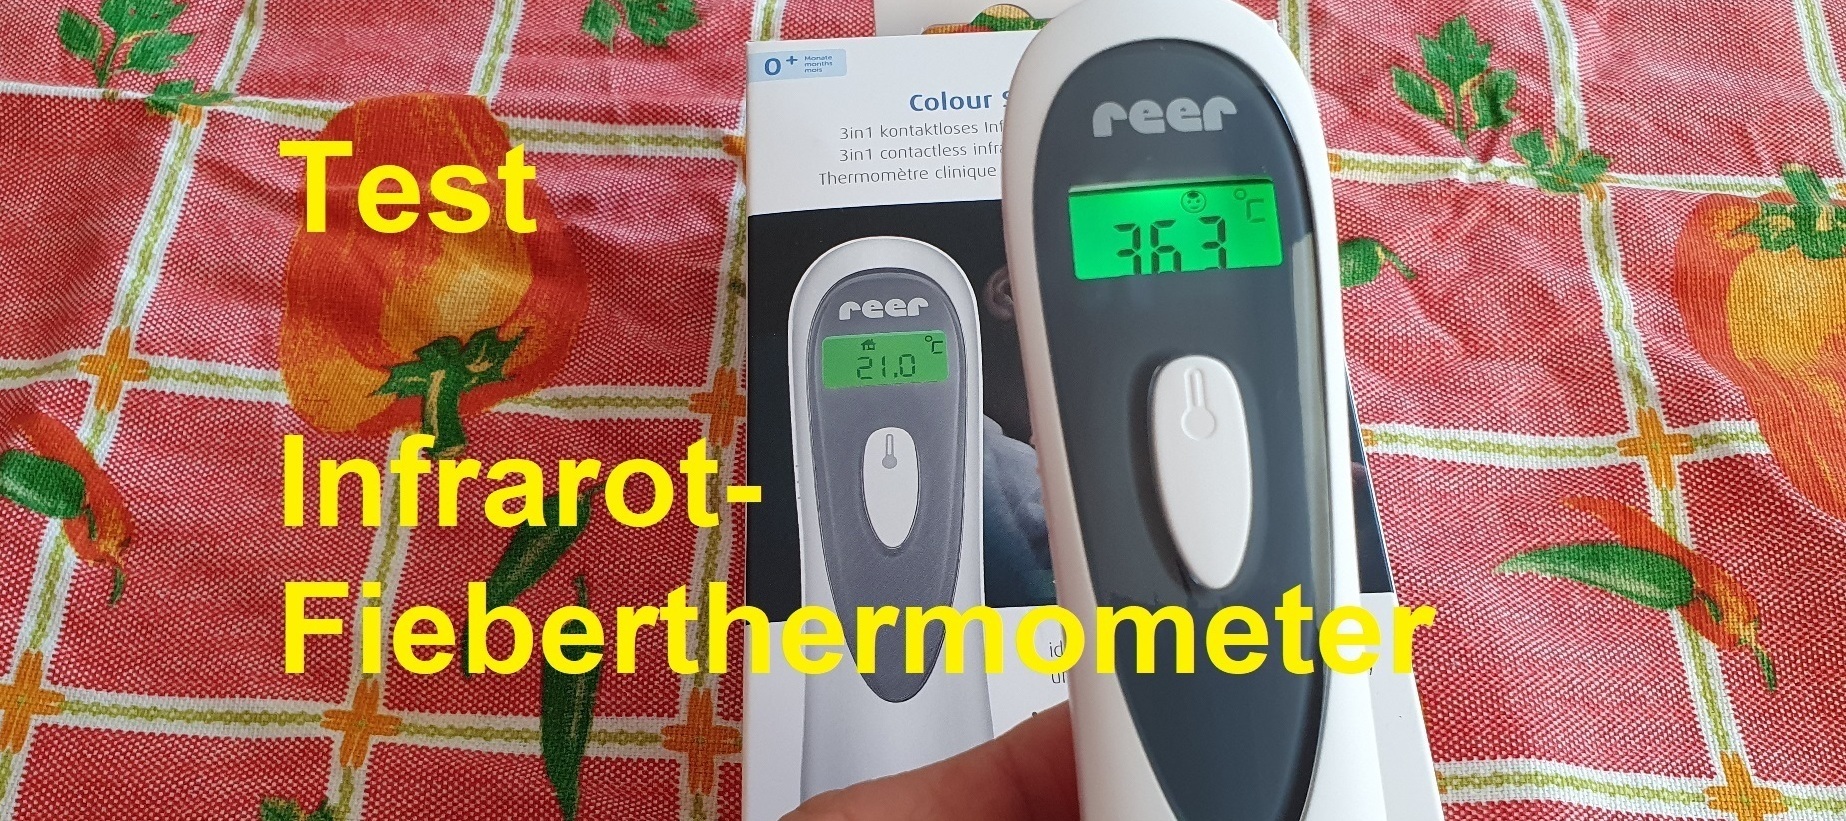 Test: Infrarot Fieberthermometer - Reer Colour SoftTemp